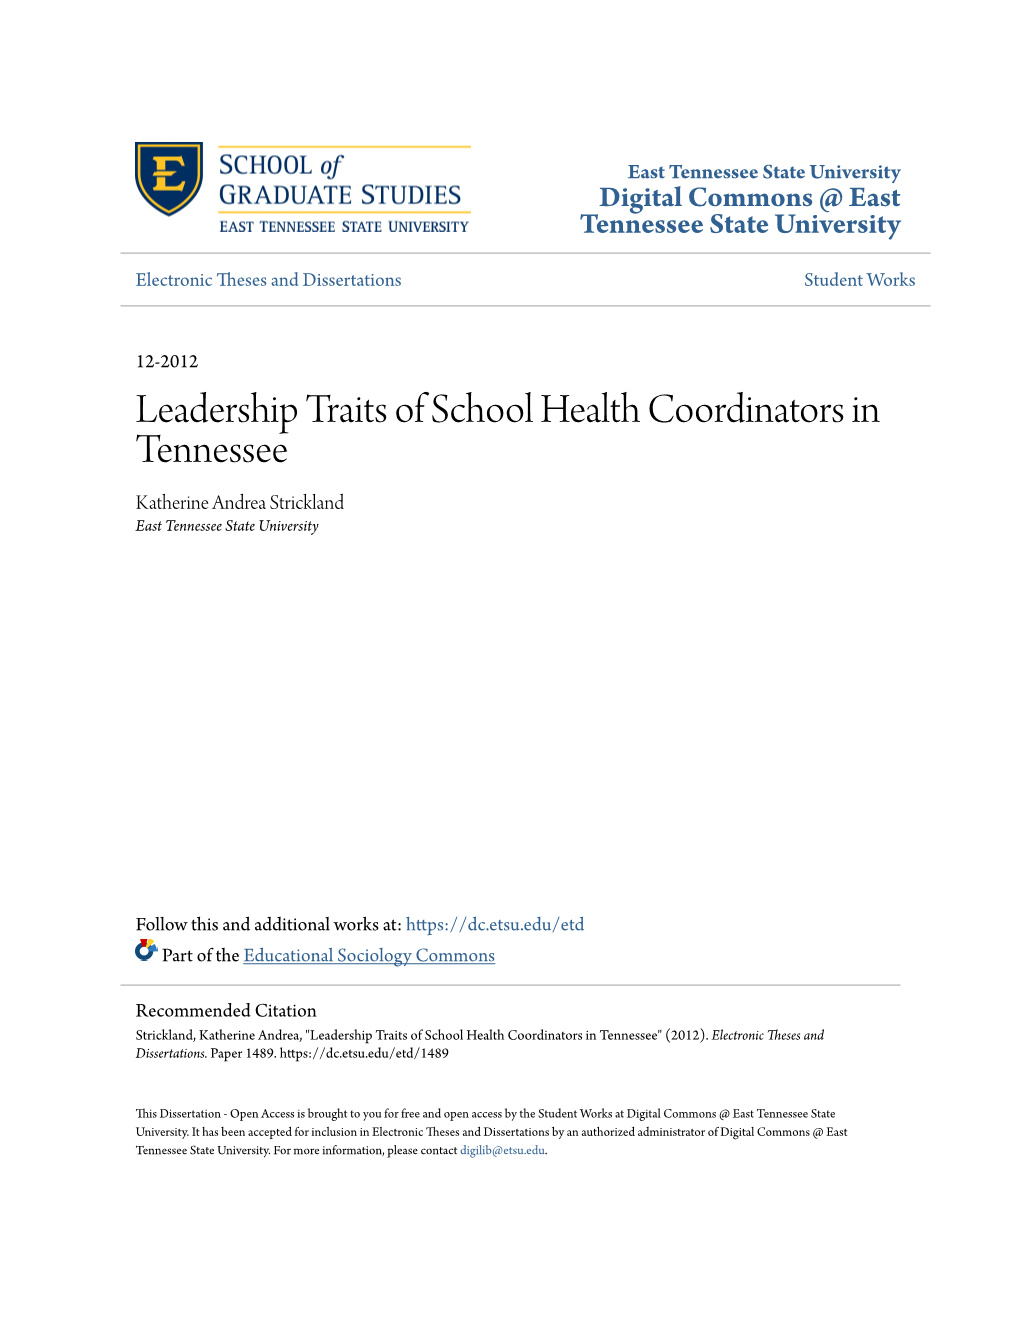 Leadership Traits of School Health Coordinators in Tennessee Katherine Andrea Strickland East Tennessee State University